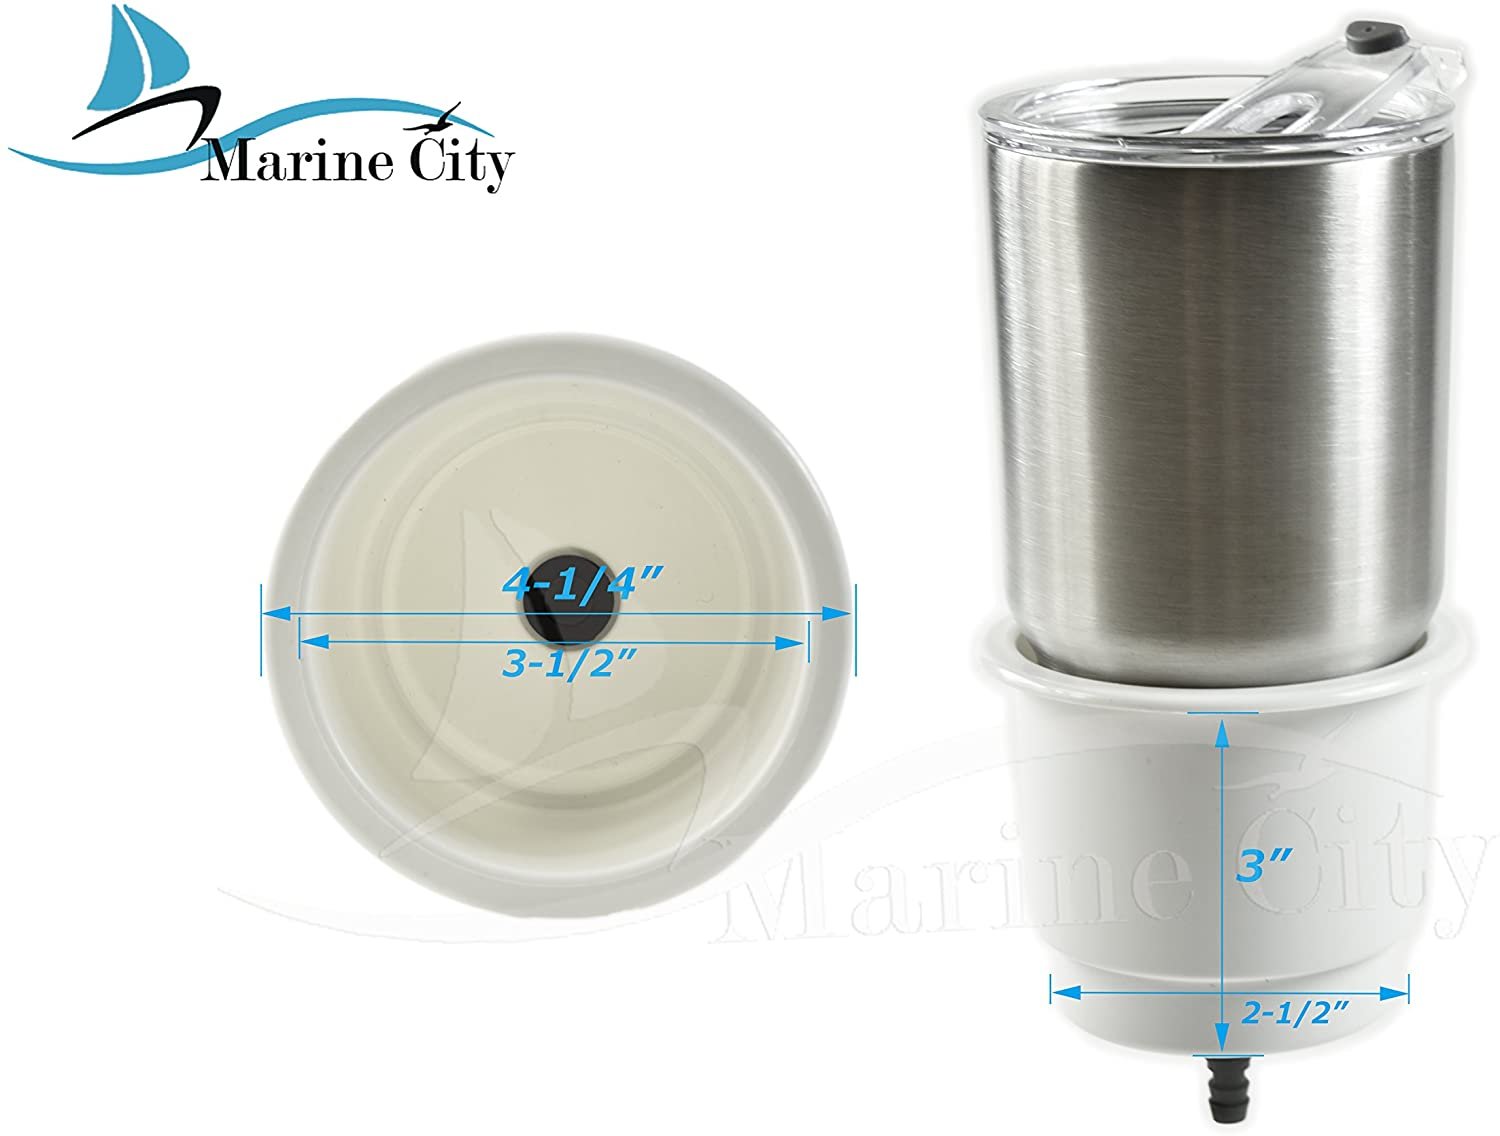 MARINE CITY Newest White Plastic Drink Cup Holder for Mug 30 Oz. 2 Pcs - image 5 of 5